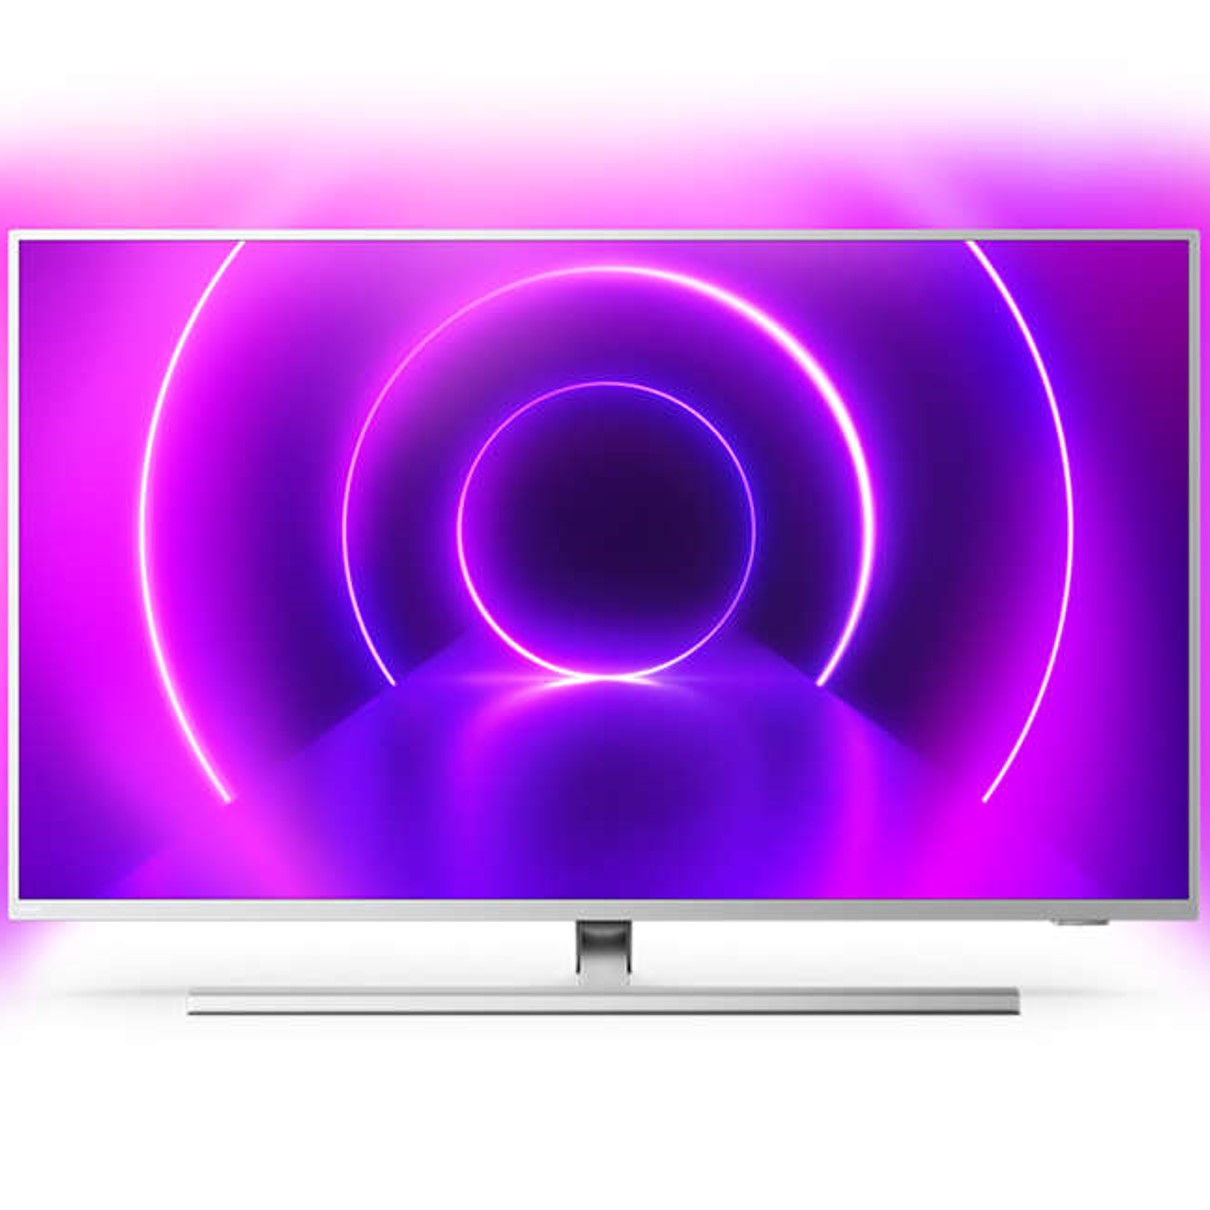 Tv philips 50pulgadas led 4k uhd -  gama 2020 -  50pus8535 -  ambilight -  hdr10+ -  android smart tv -  4 hdmi -  2 usb -  dvb - t - t2 - t2 - hd - c - s - s2 -  wifi